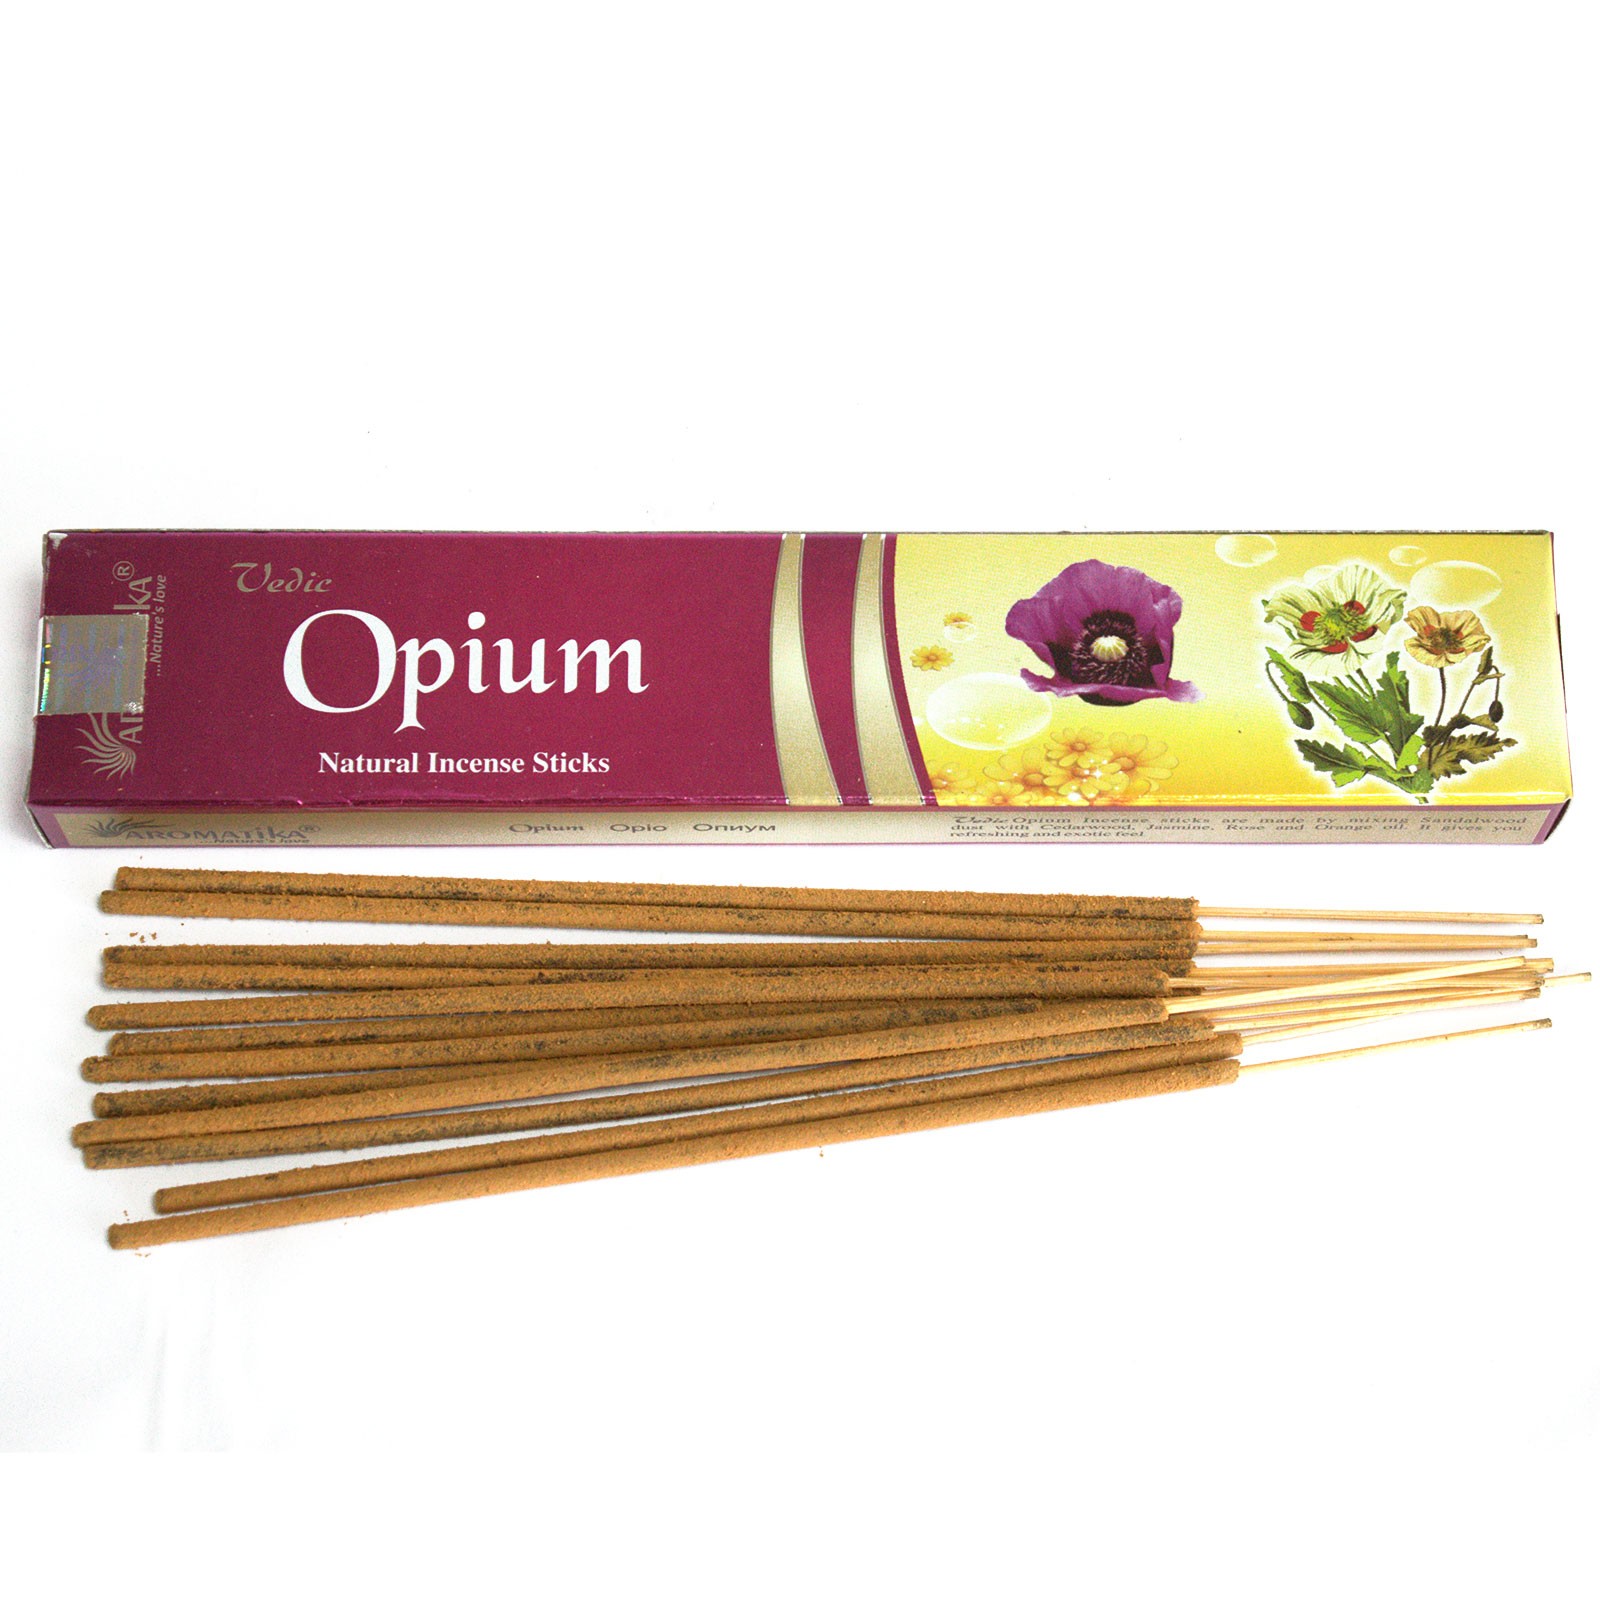 Vedic OPIUM Natural Incense Sticks, Aromatika (ОПИУМ натуральные ароматические палочки, Ароматика), 15 г.